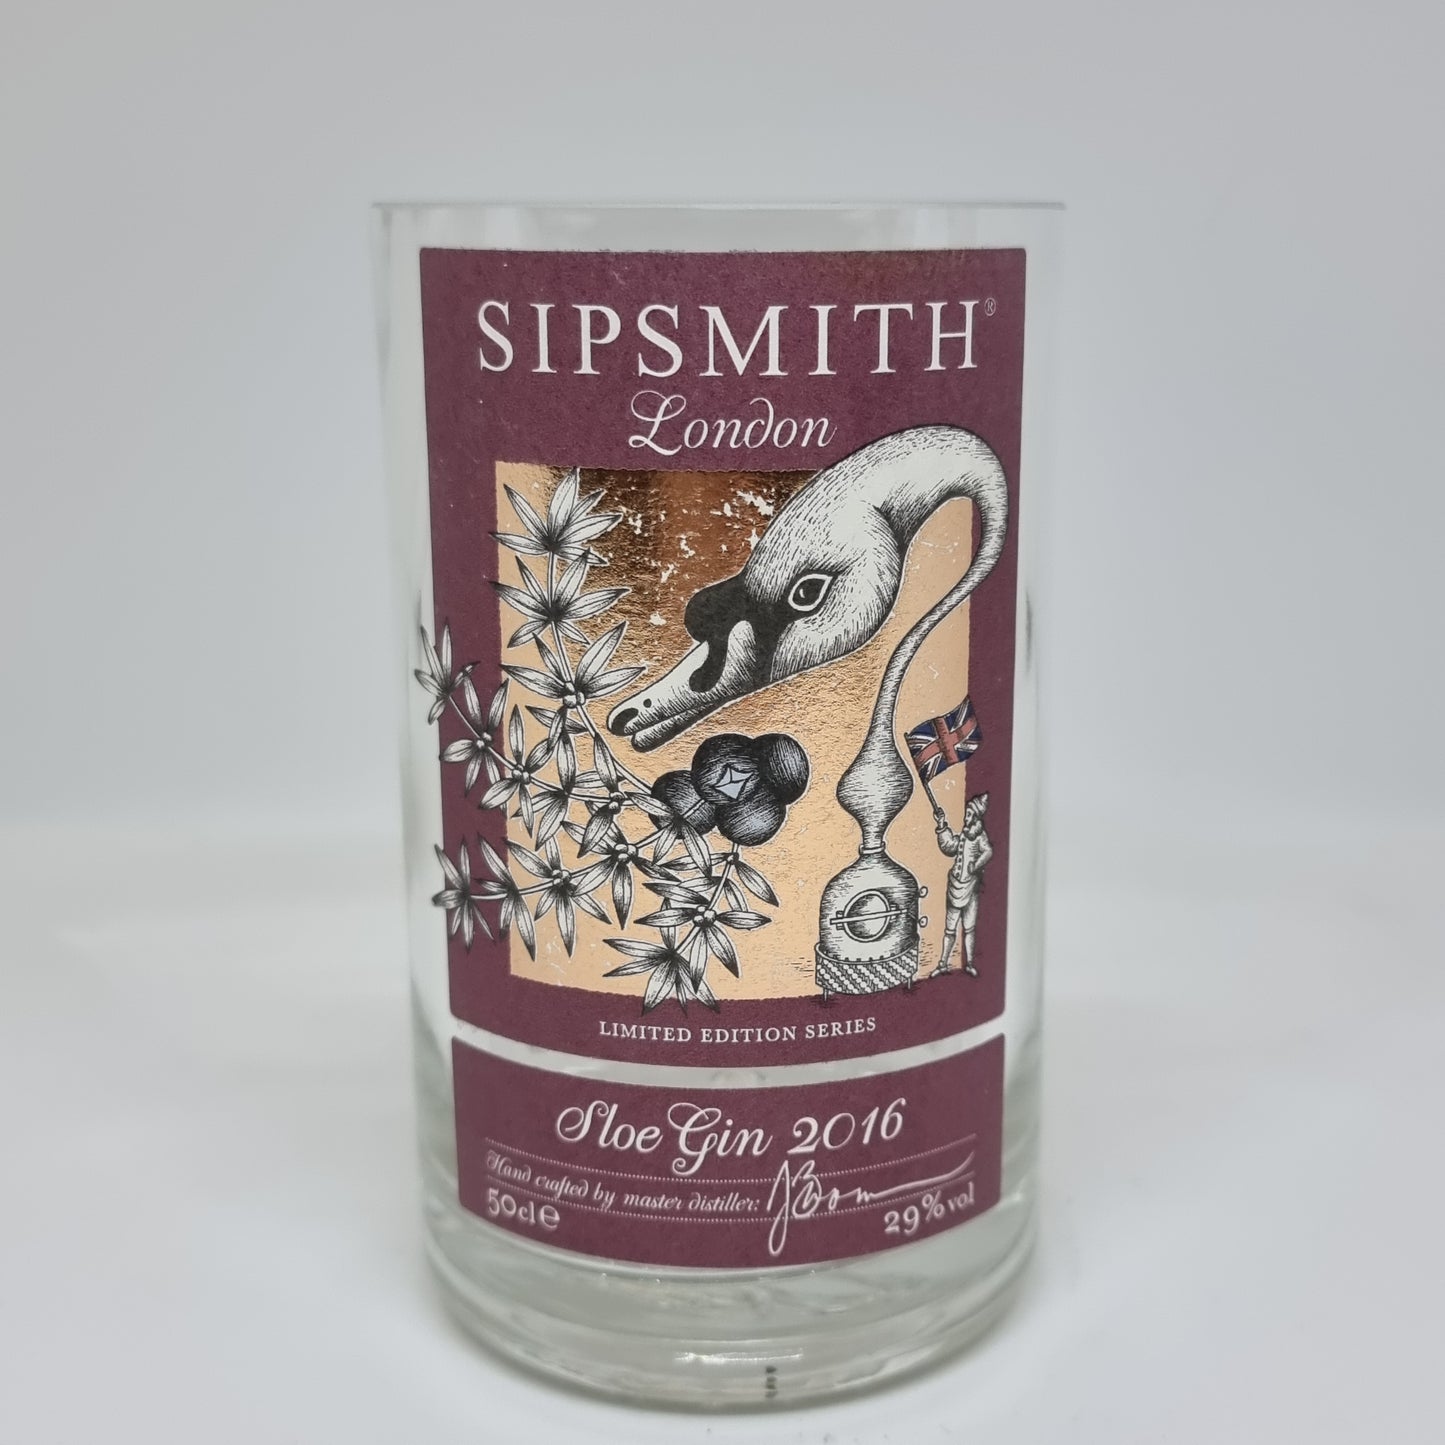 Sipsmith Sloe Gin Bottle Candle